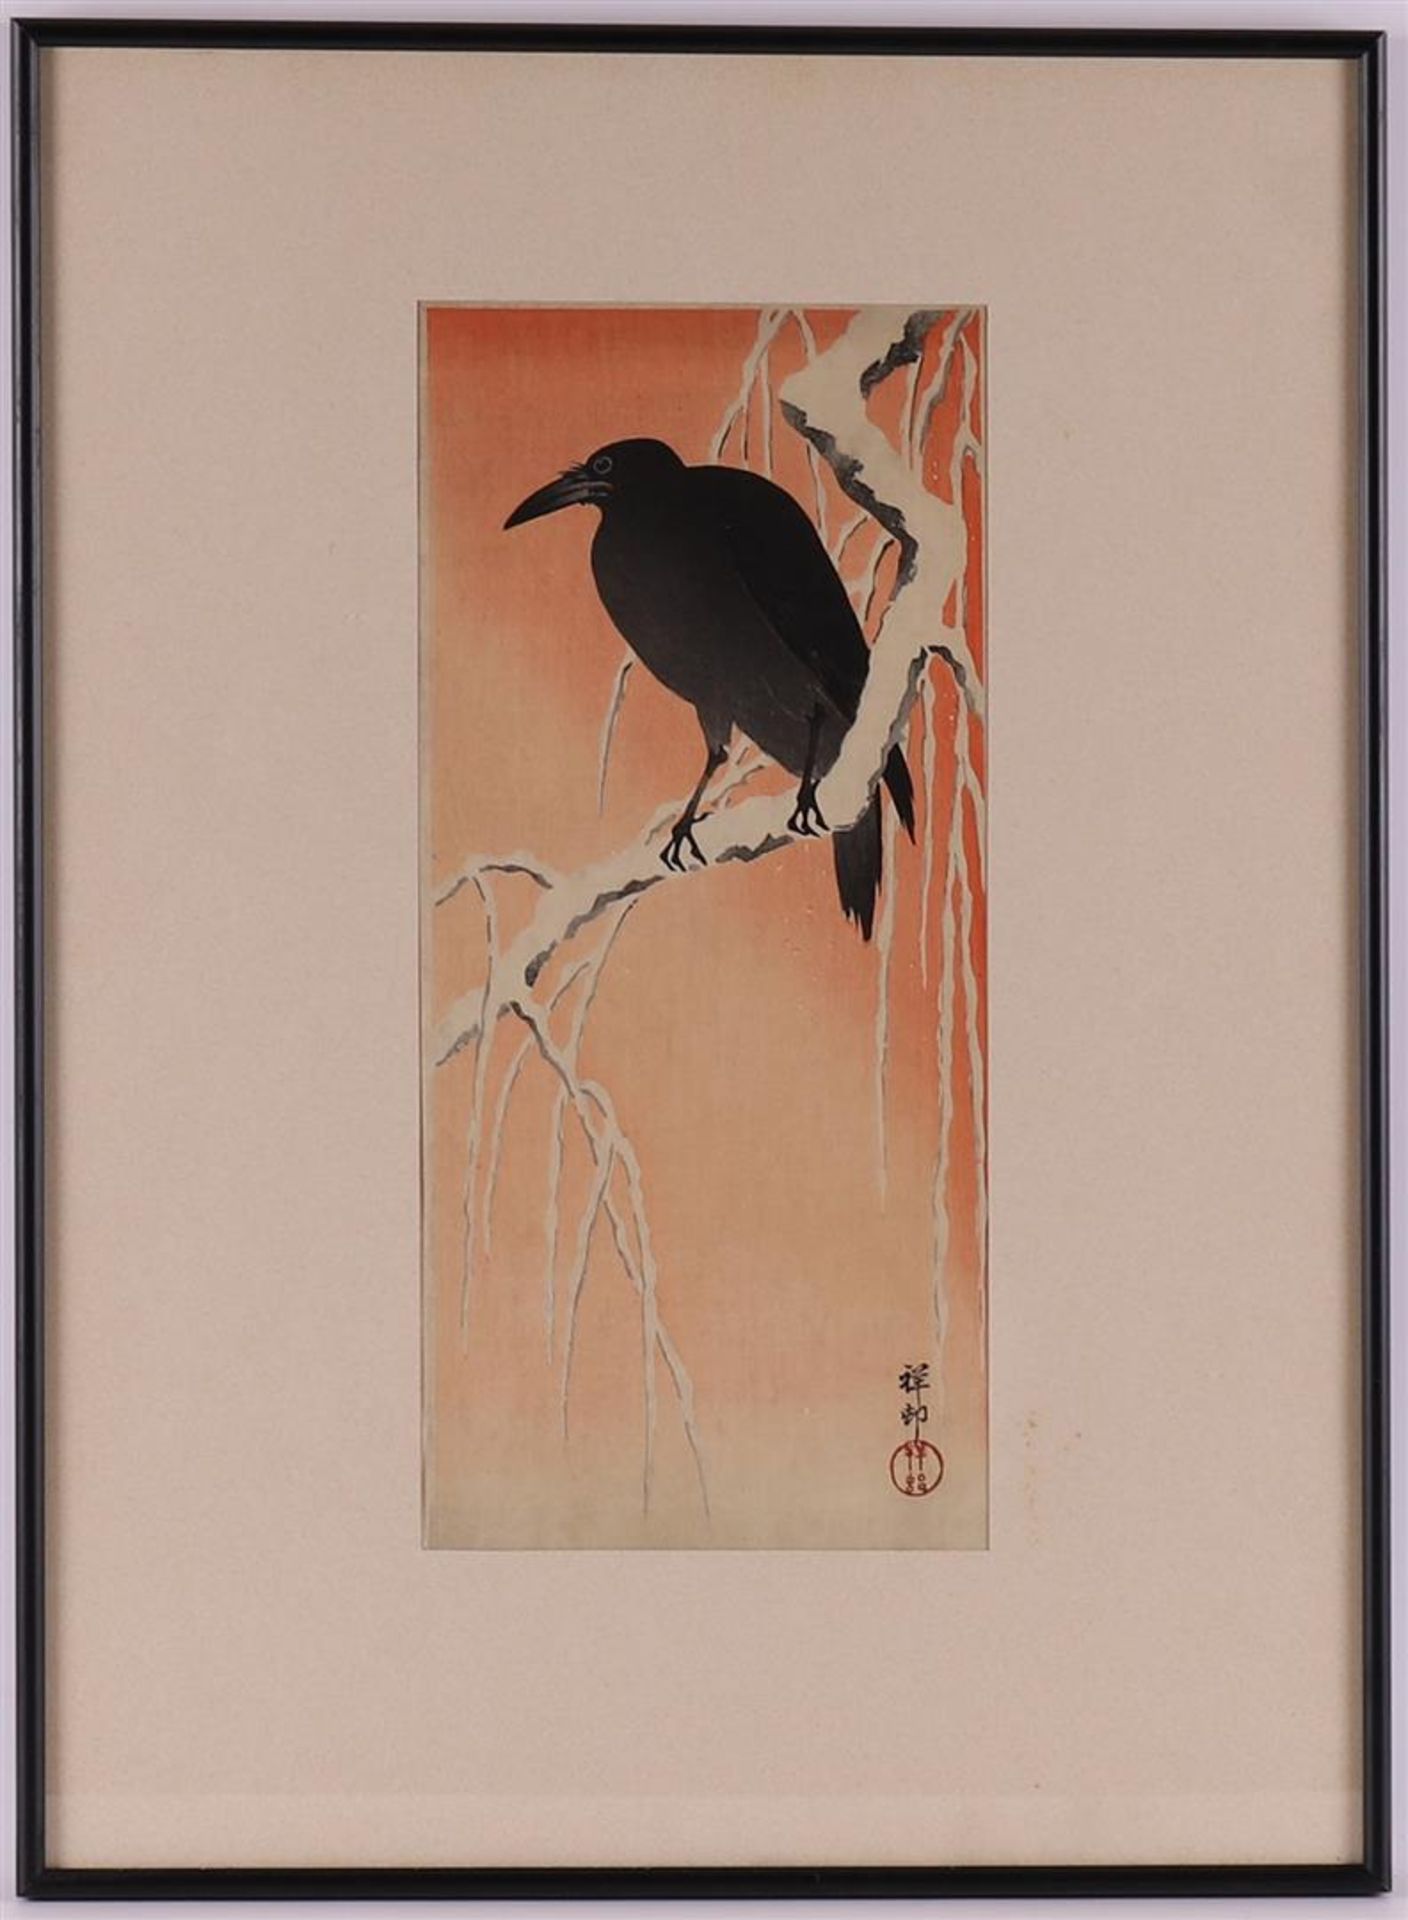 Ukio-e, Koson, Ohara (1877-1945) "Crow on a snowy branch", signed 'Koson' ca. 1915 l.r., color